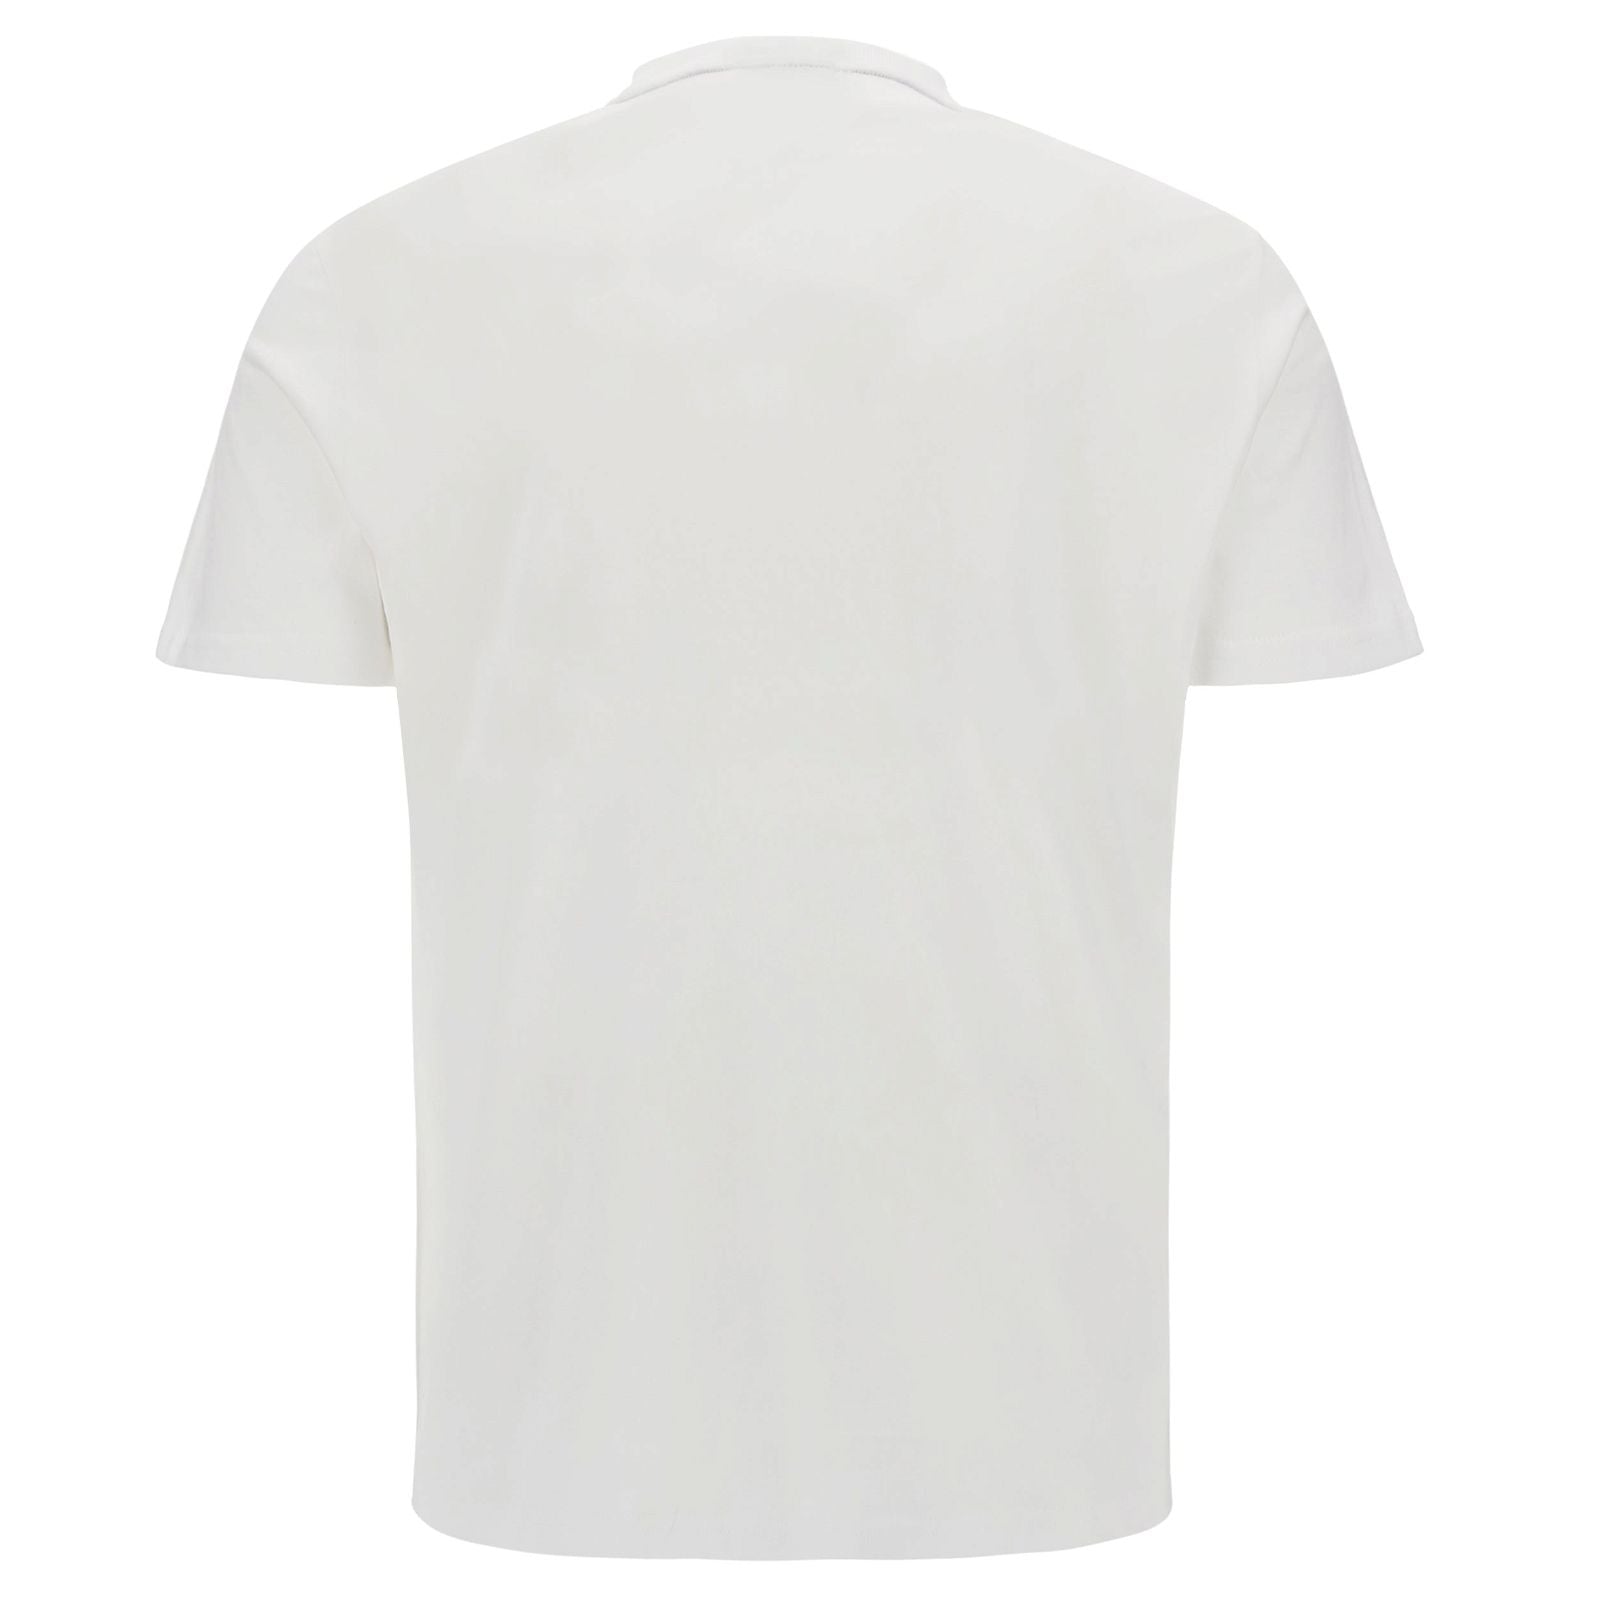 Men's T-shirt with Black Logo - White + Black 2